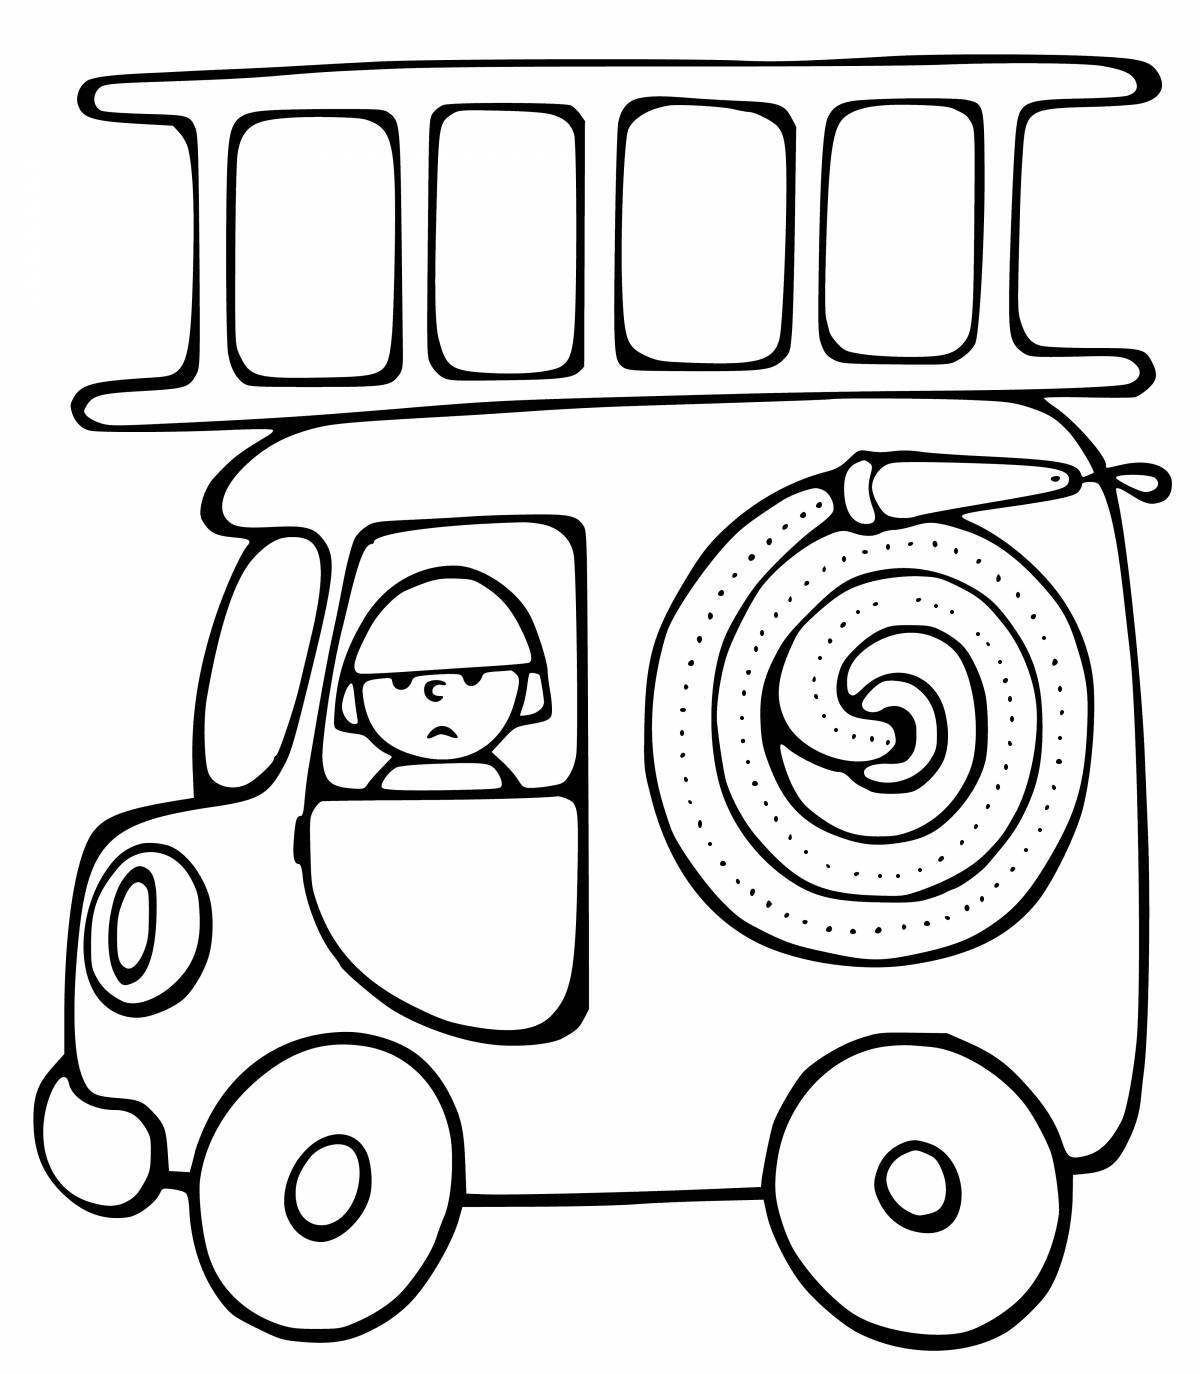 Захватывающая транспортная раскраска для детей 3-4 лет